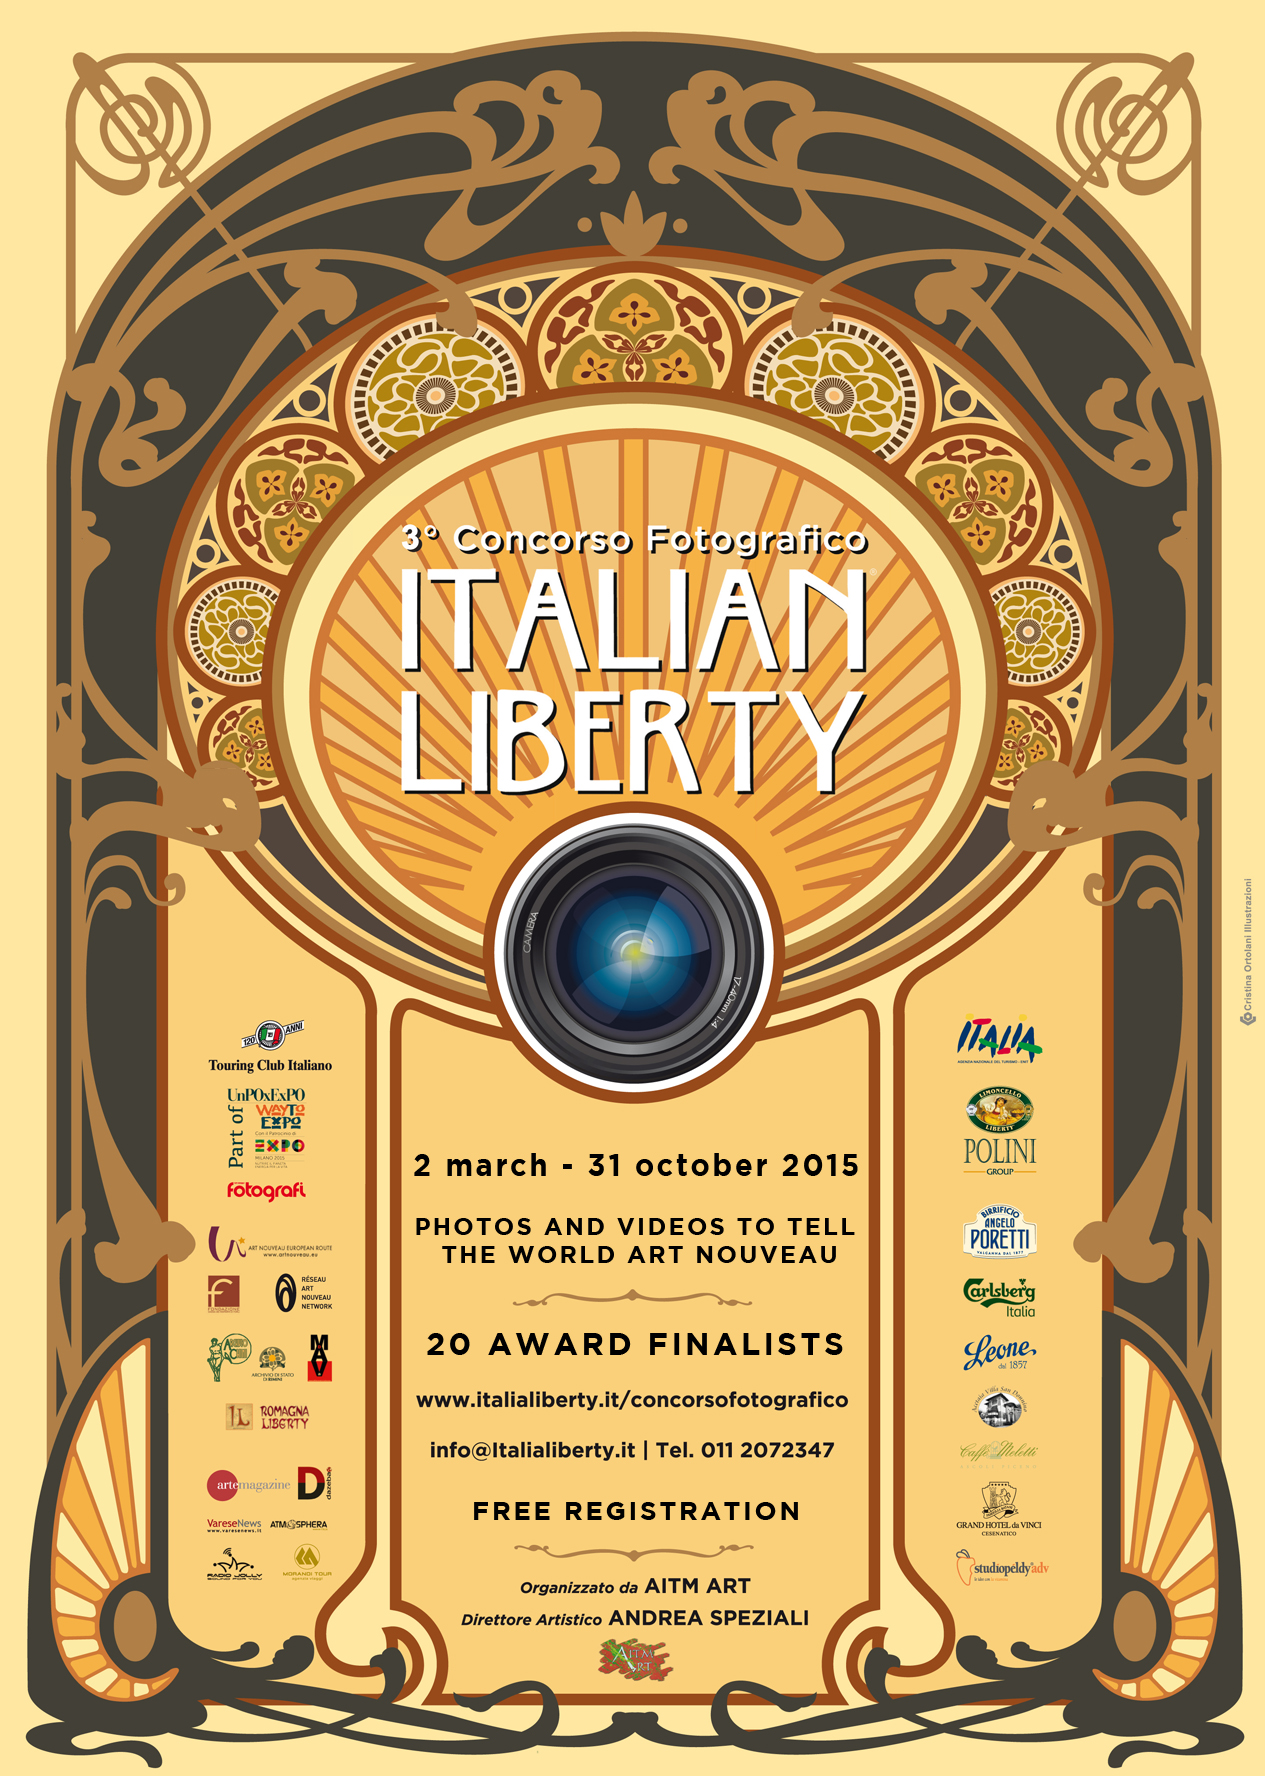 ITALIAN LIBERTY, World photographic contest dedicated to the Art Nouveau